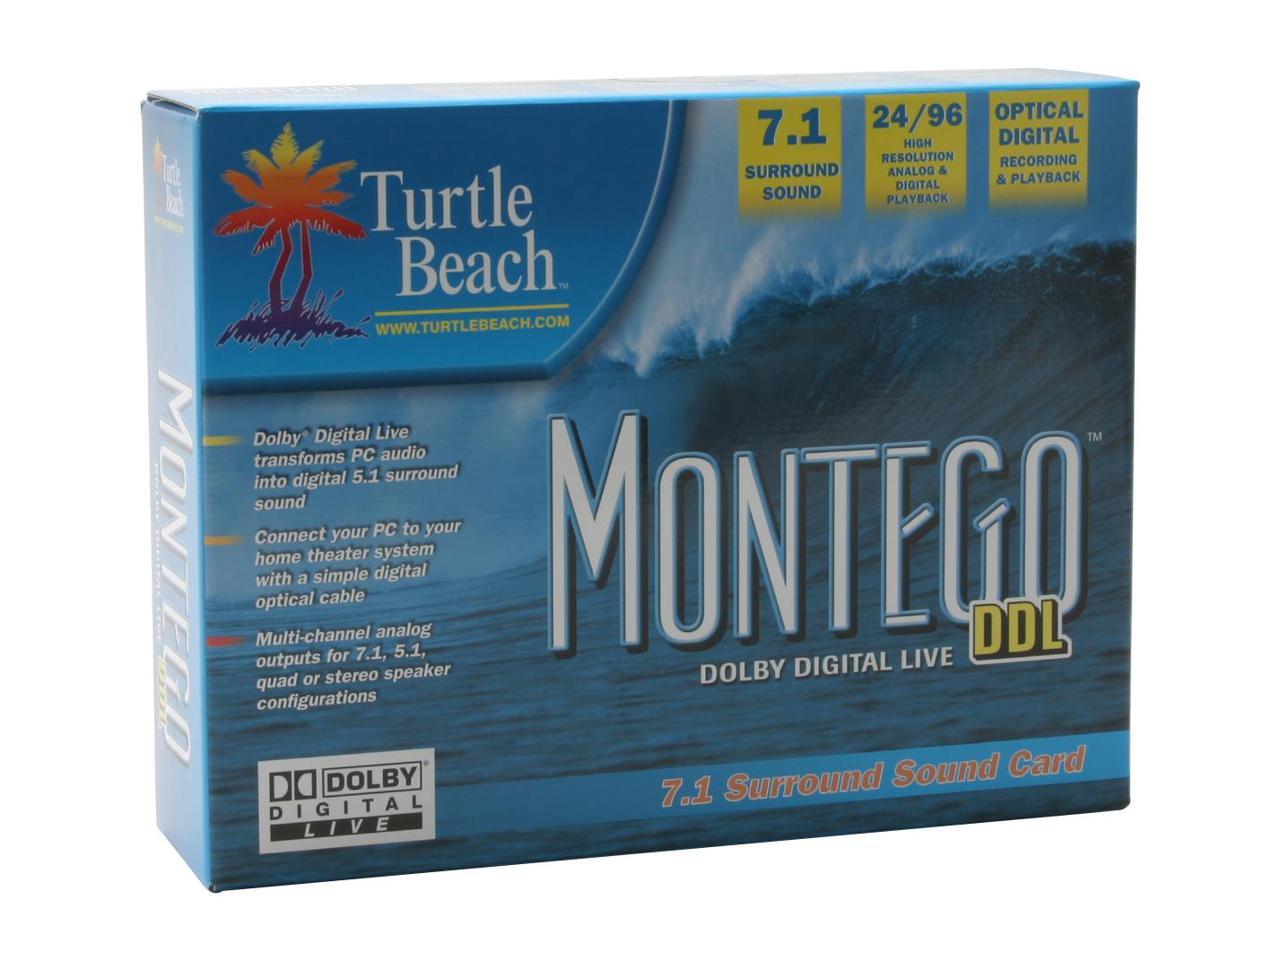 turtle beach montego ddl gq968 7.1 channel pci sound card